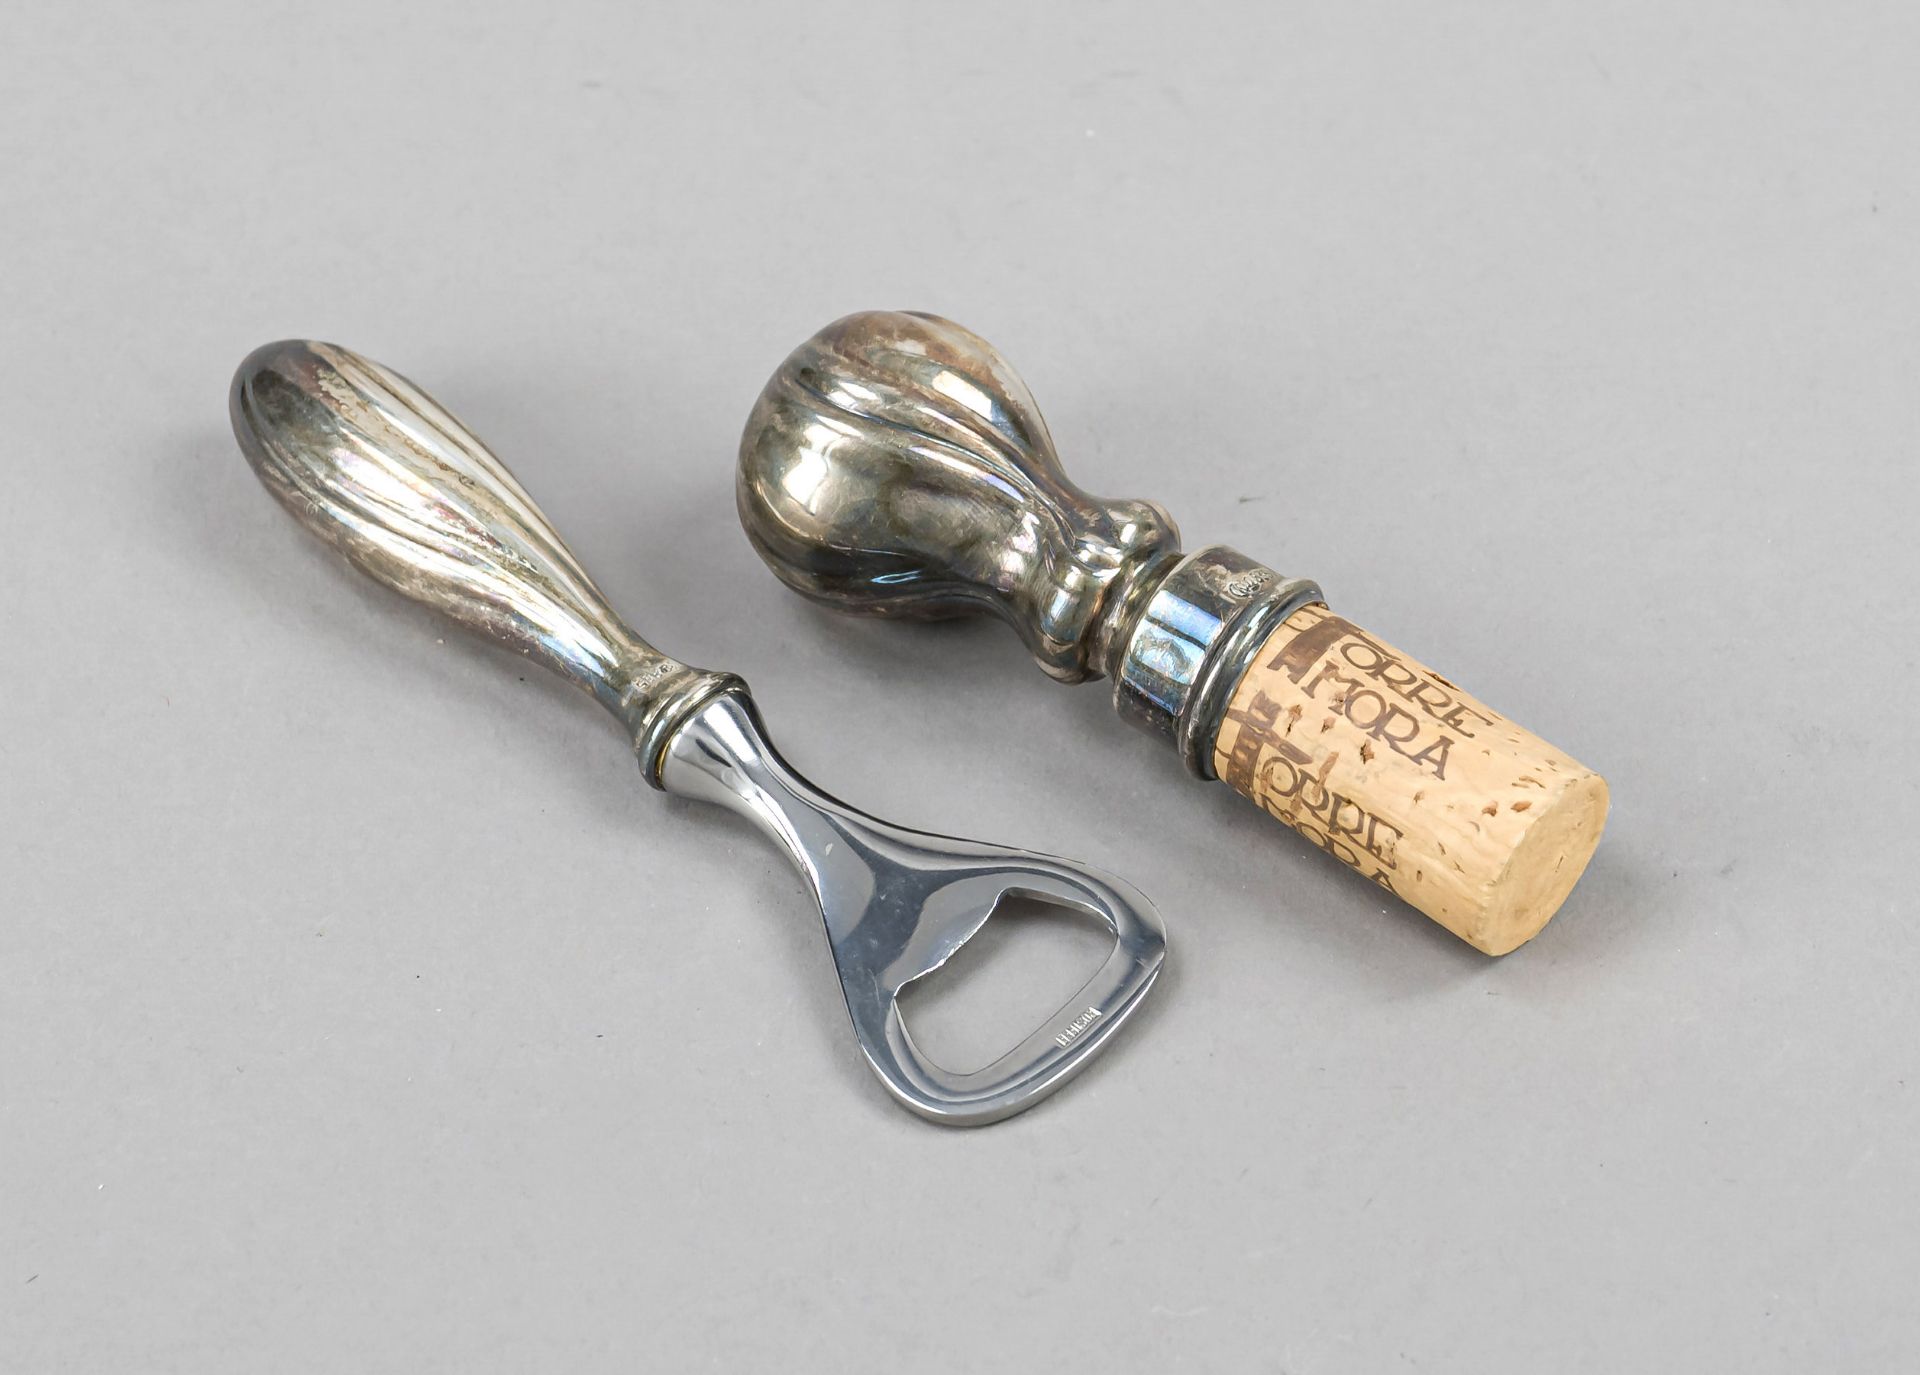 Cork holder and bottle opener, German, 20th century, maker's mark Jakob Grimminger, Schwäbisch